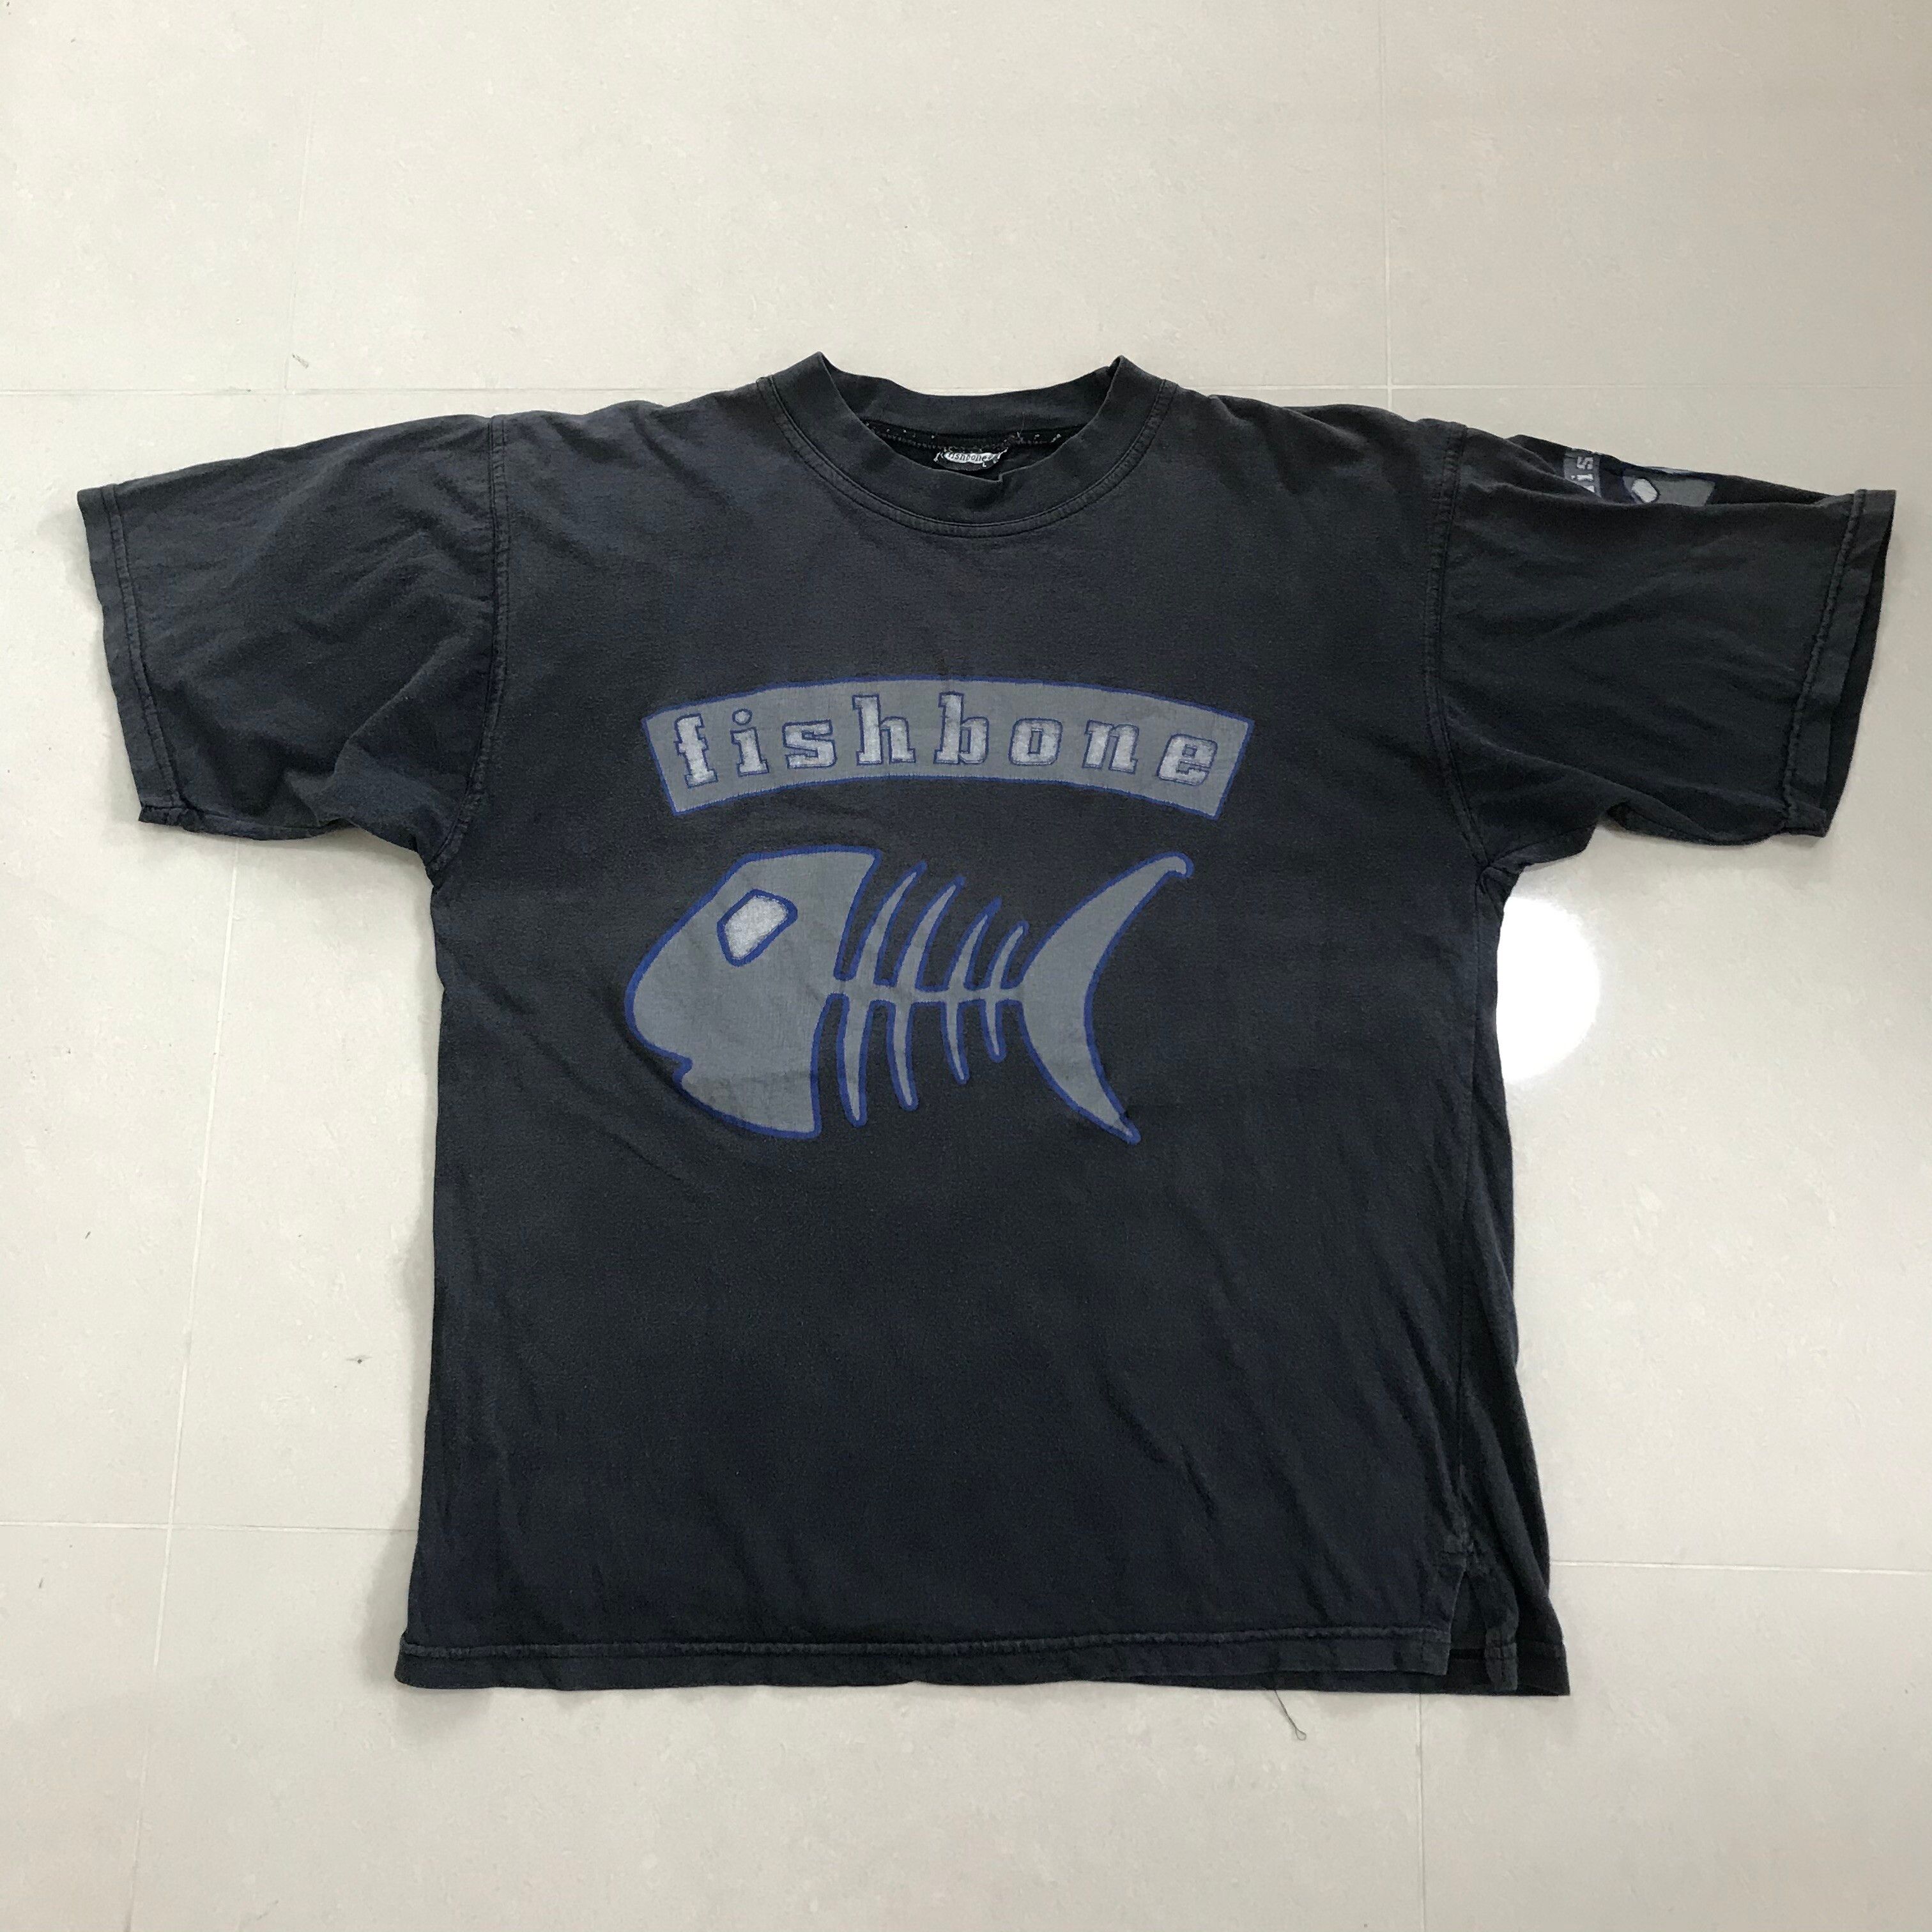 Vintage T Shirt Fishbone | Grailed